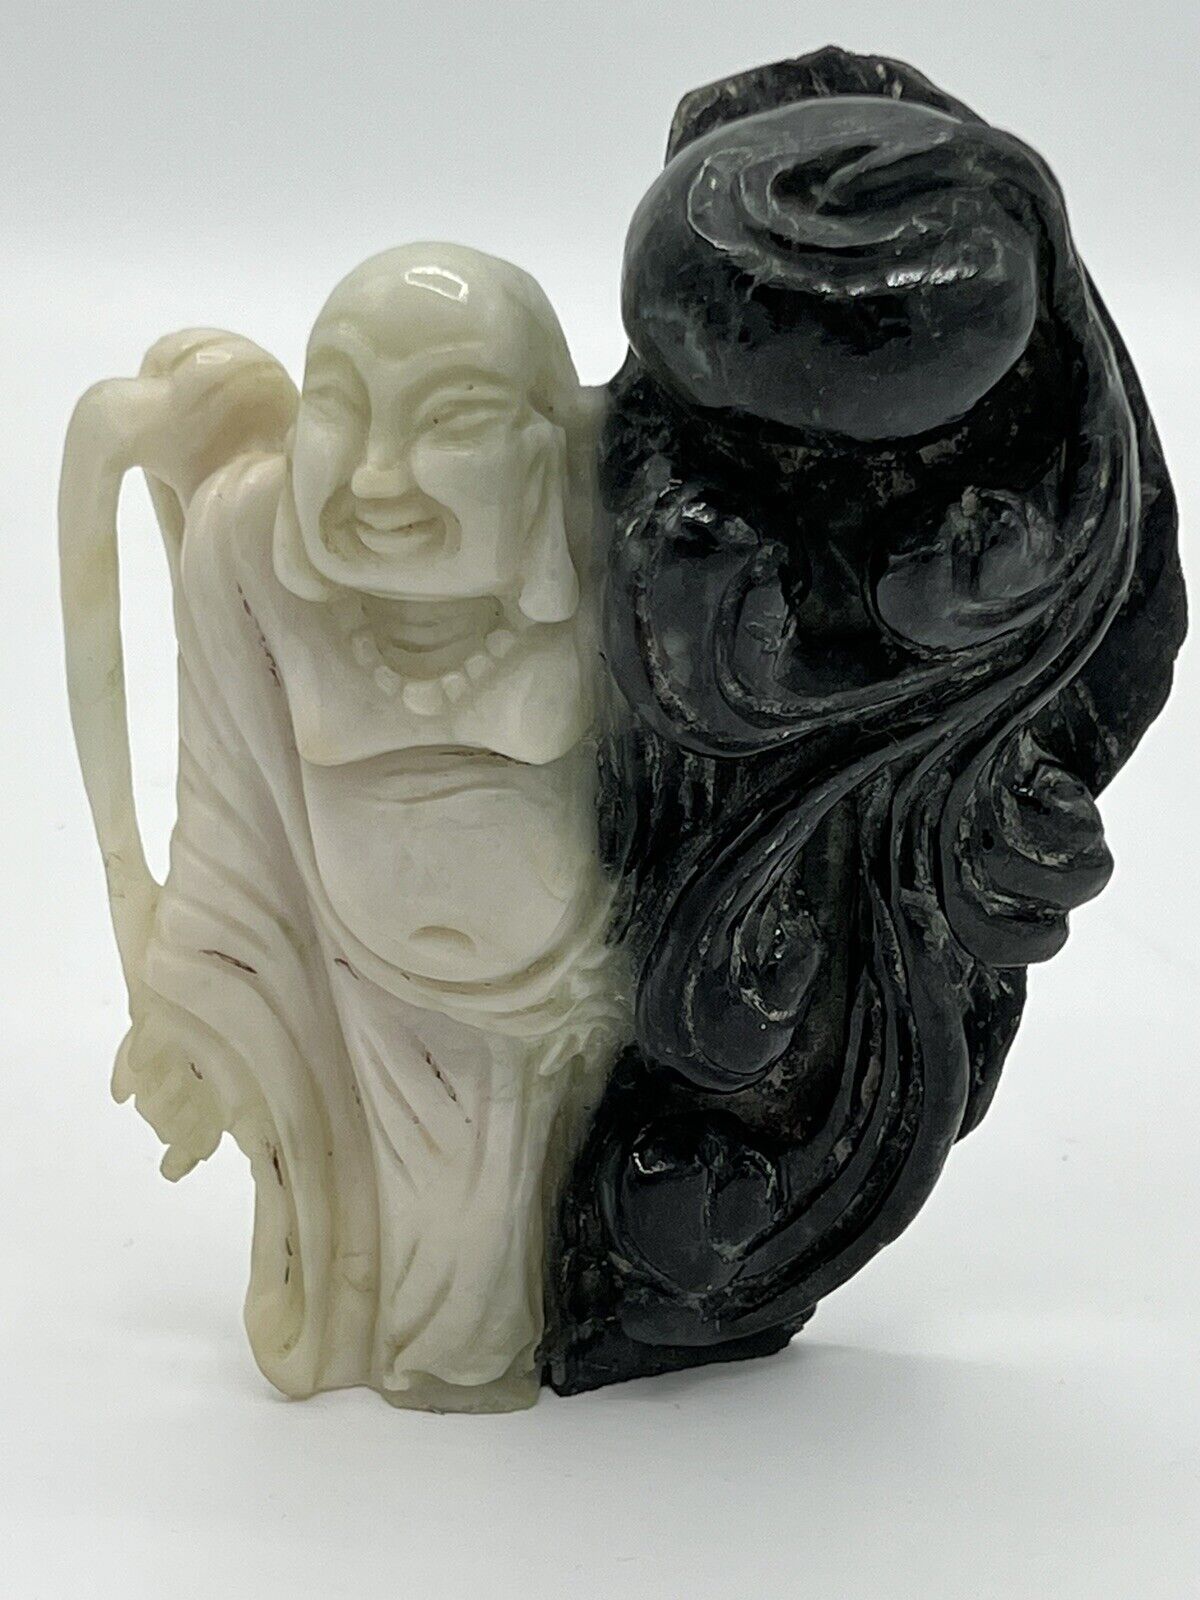 Jade Smiling Buddha Oriental Figurine 5”tall